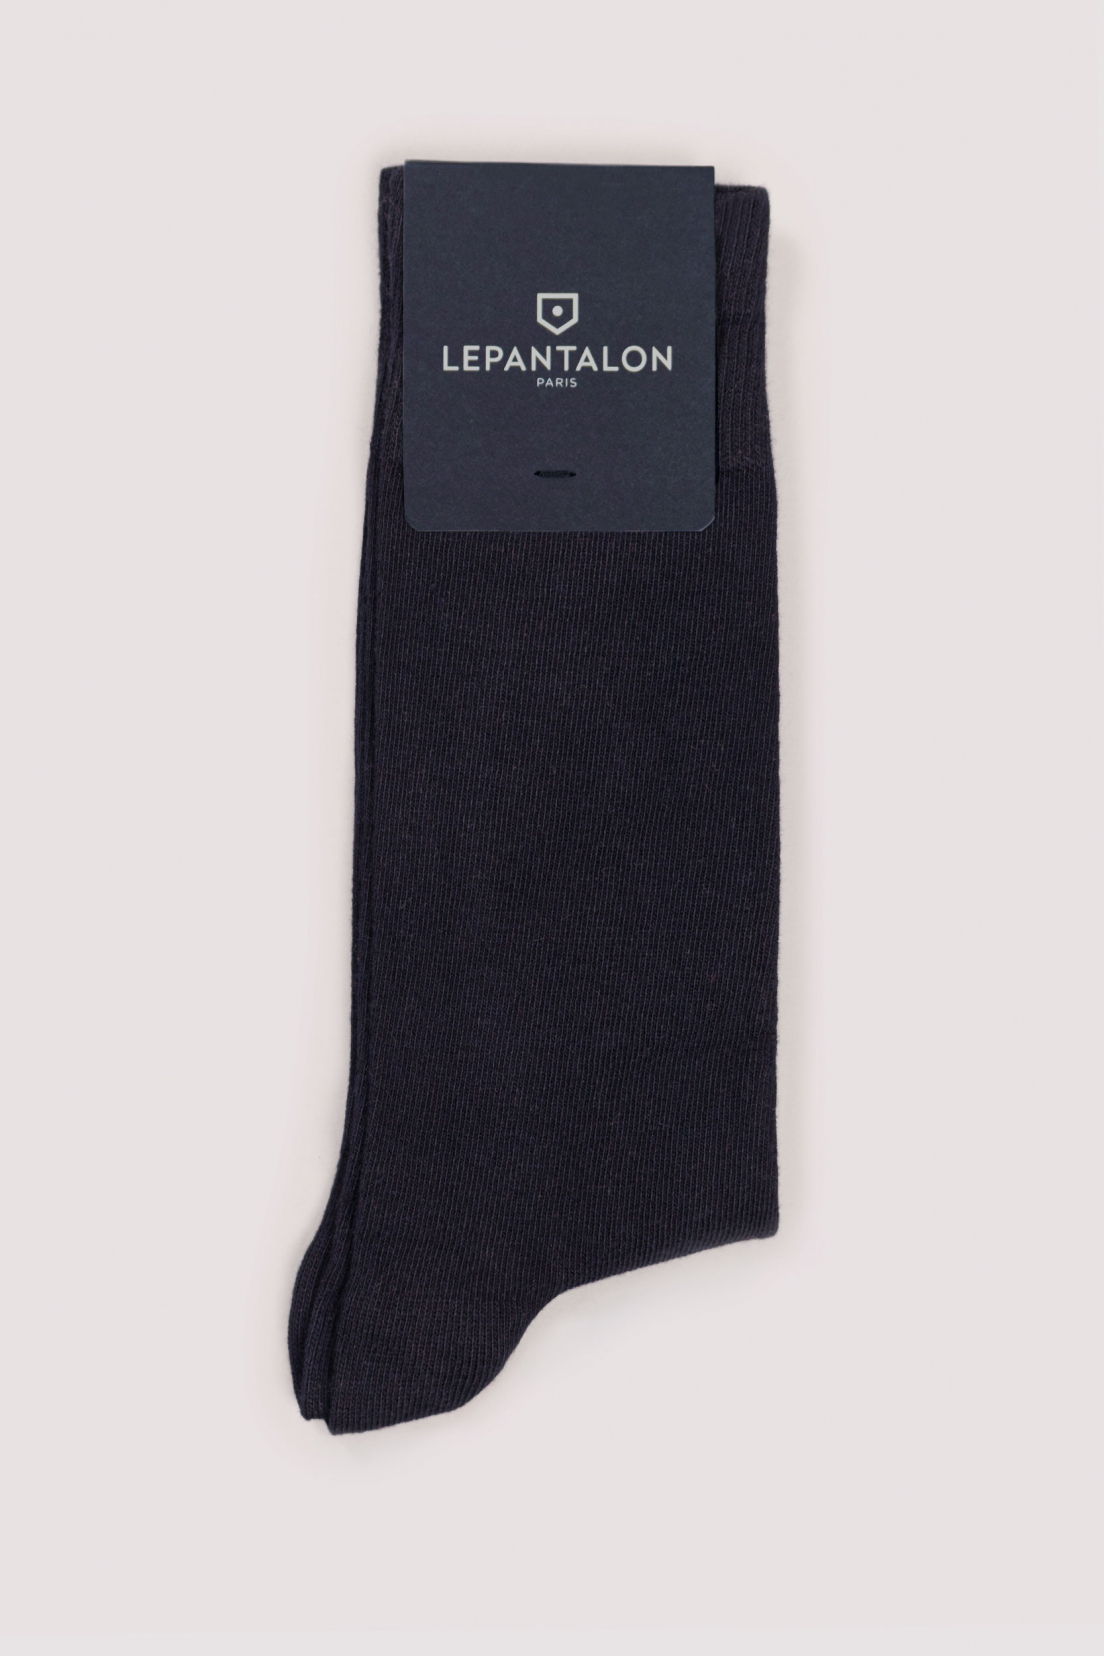 LePantalon: men's navy blue pair of socks